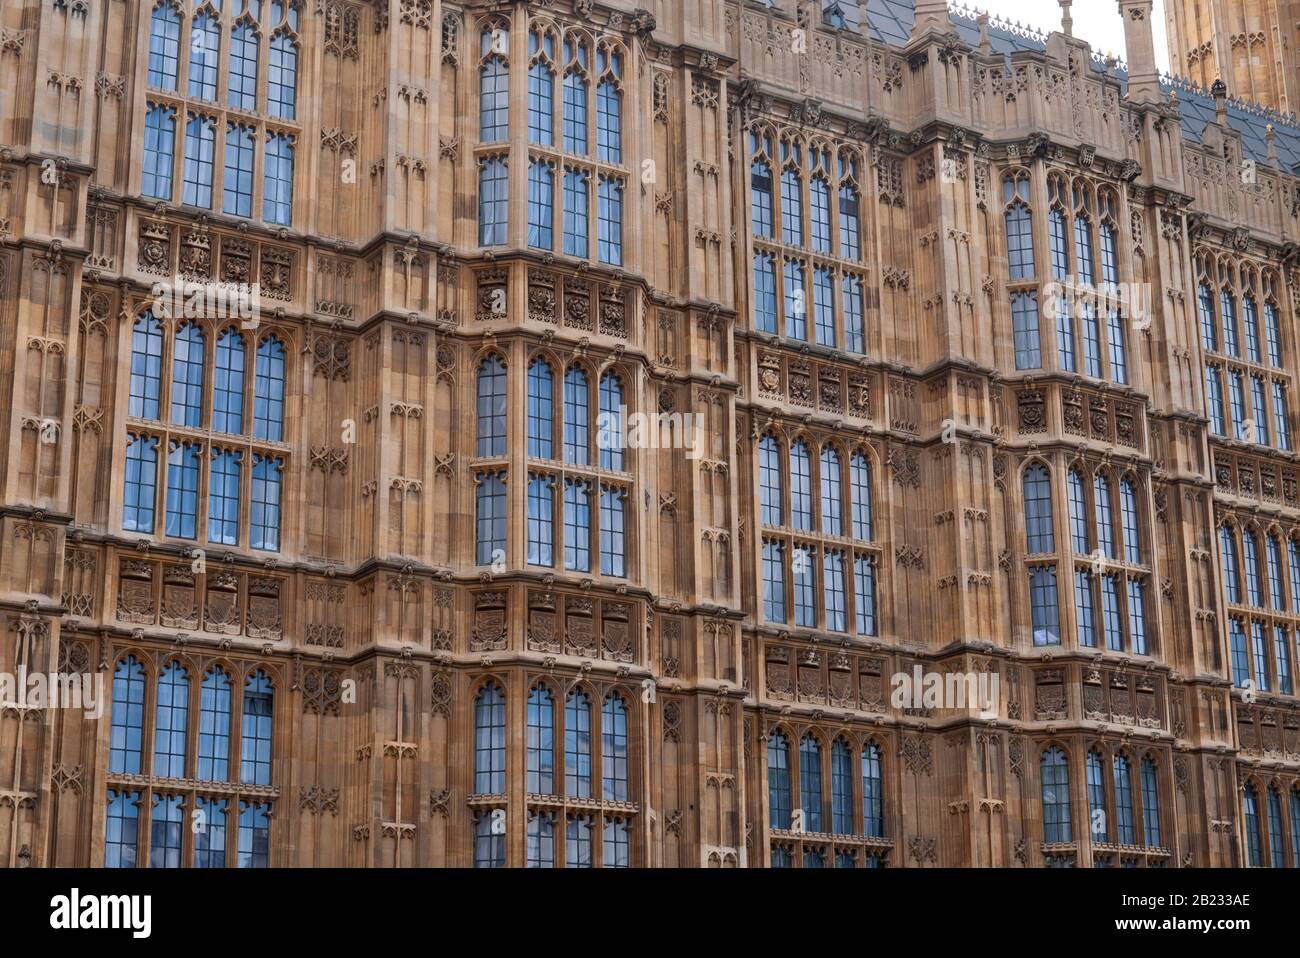 Windowed facade of Palace of Westminster, London, United Kingdom Stock Photo